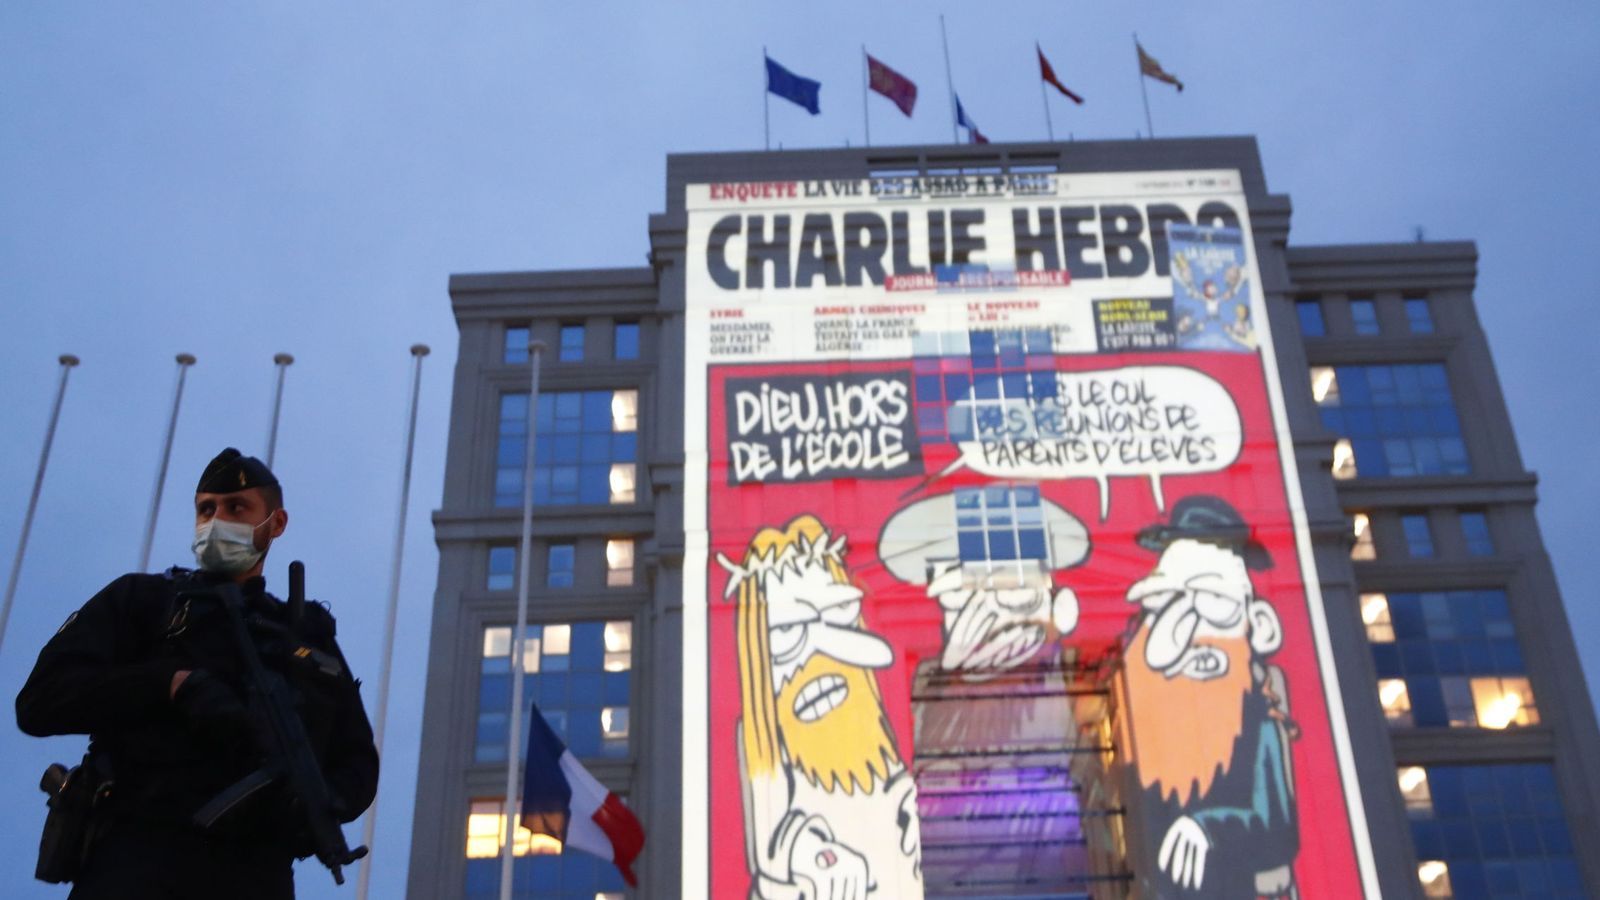 Chalie Hebdo